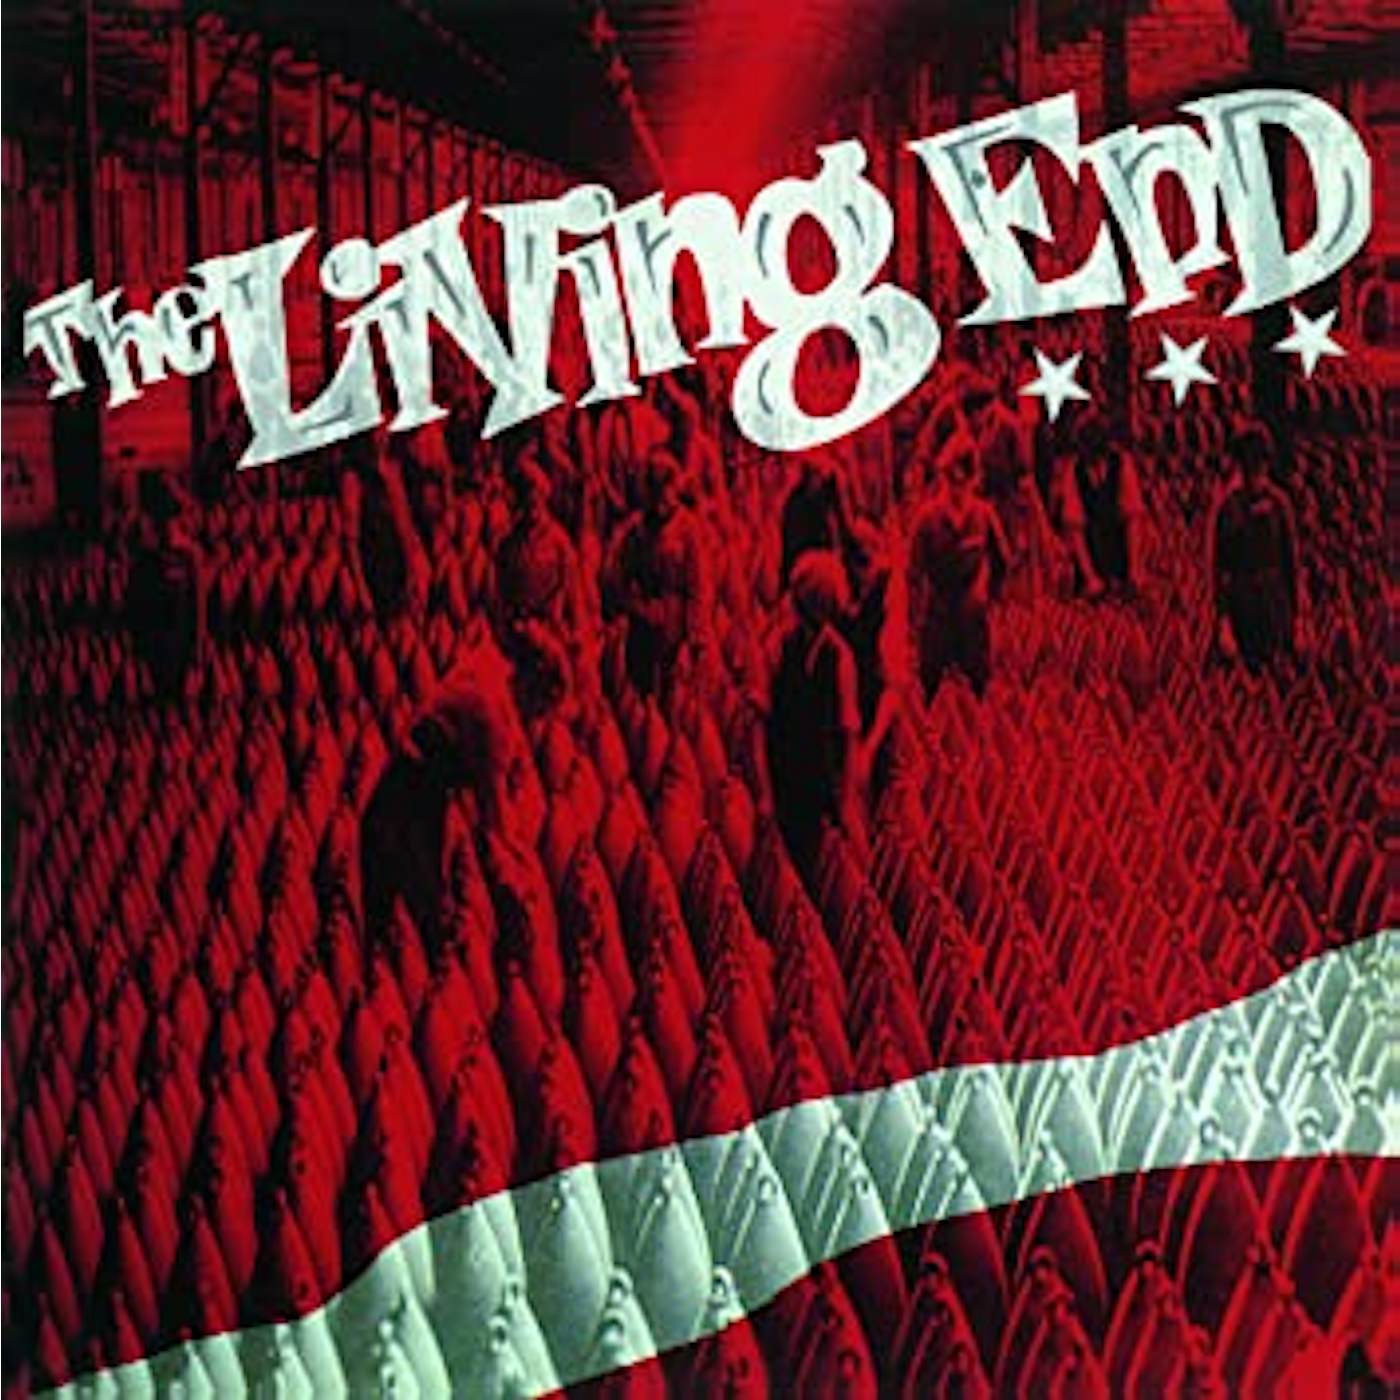 The Living End (180G) Vinyl Record